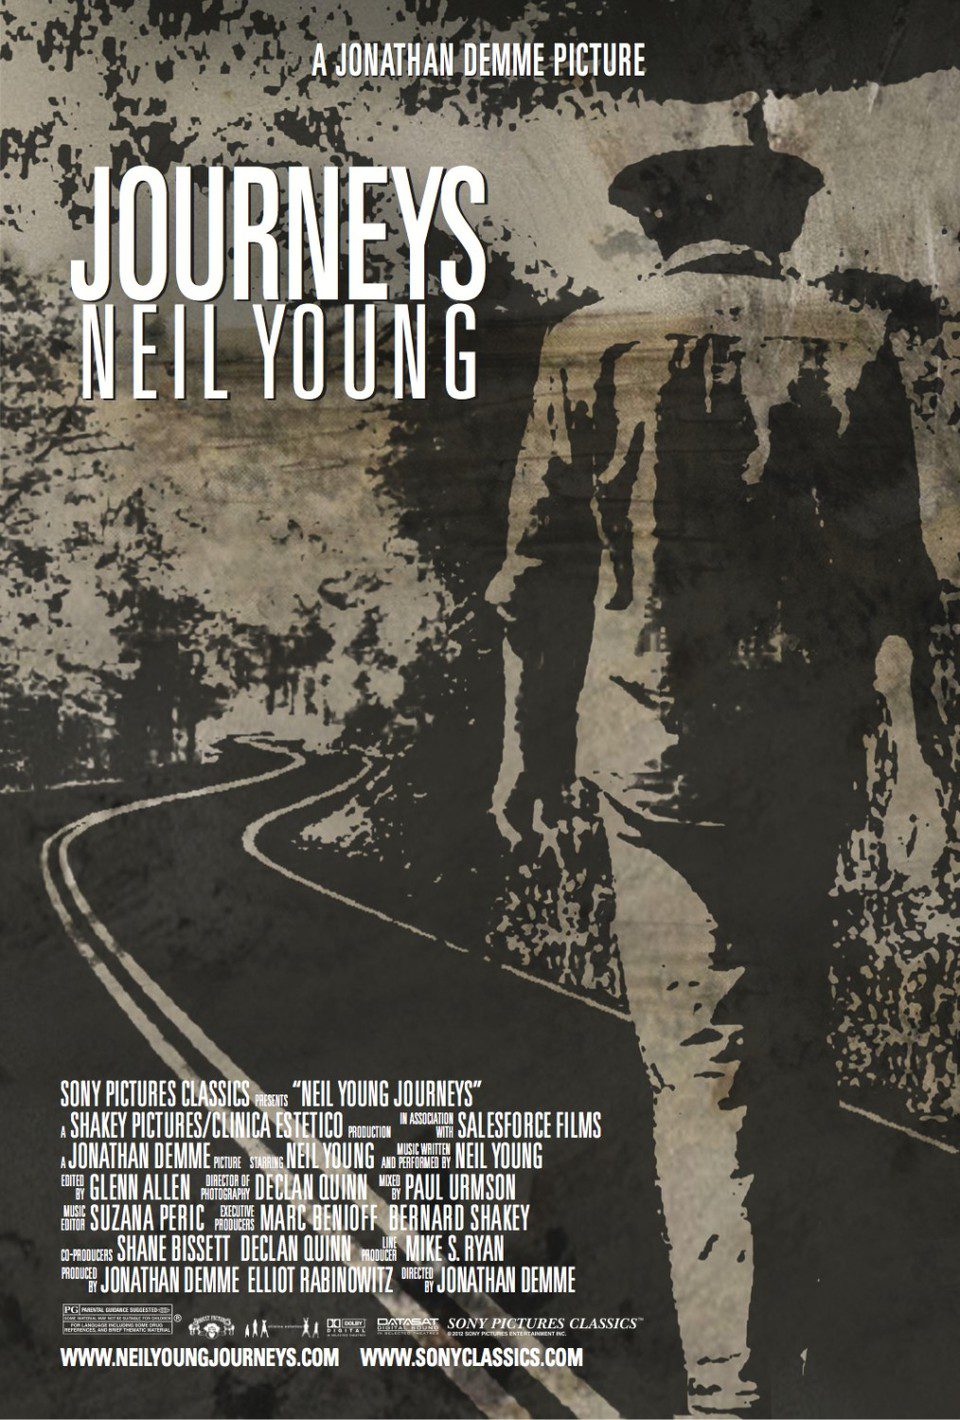 Poster of Neil Young Journeys - EEUU